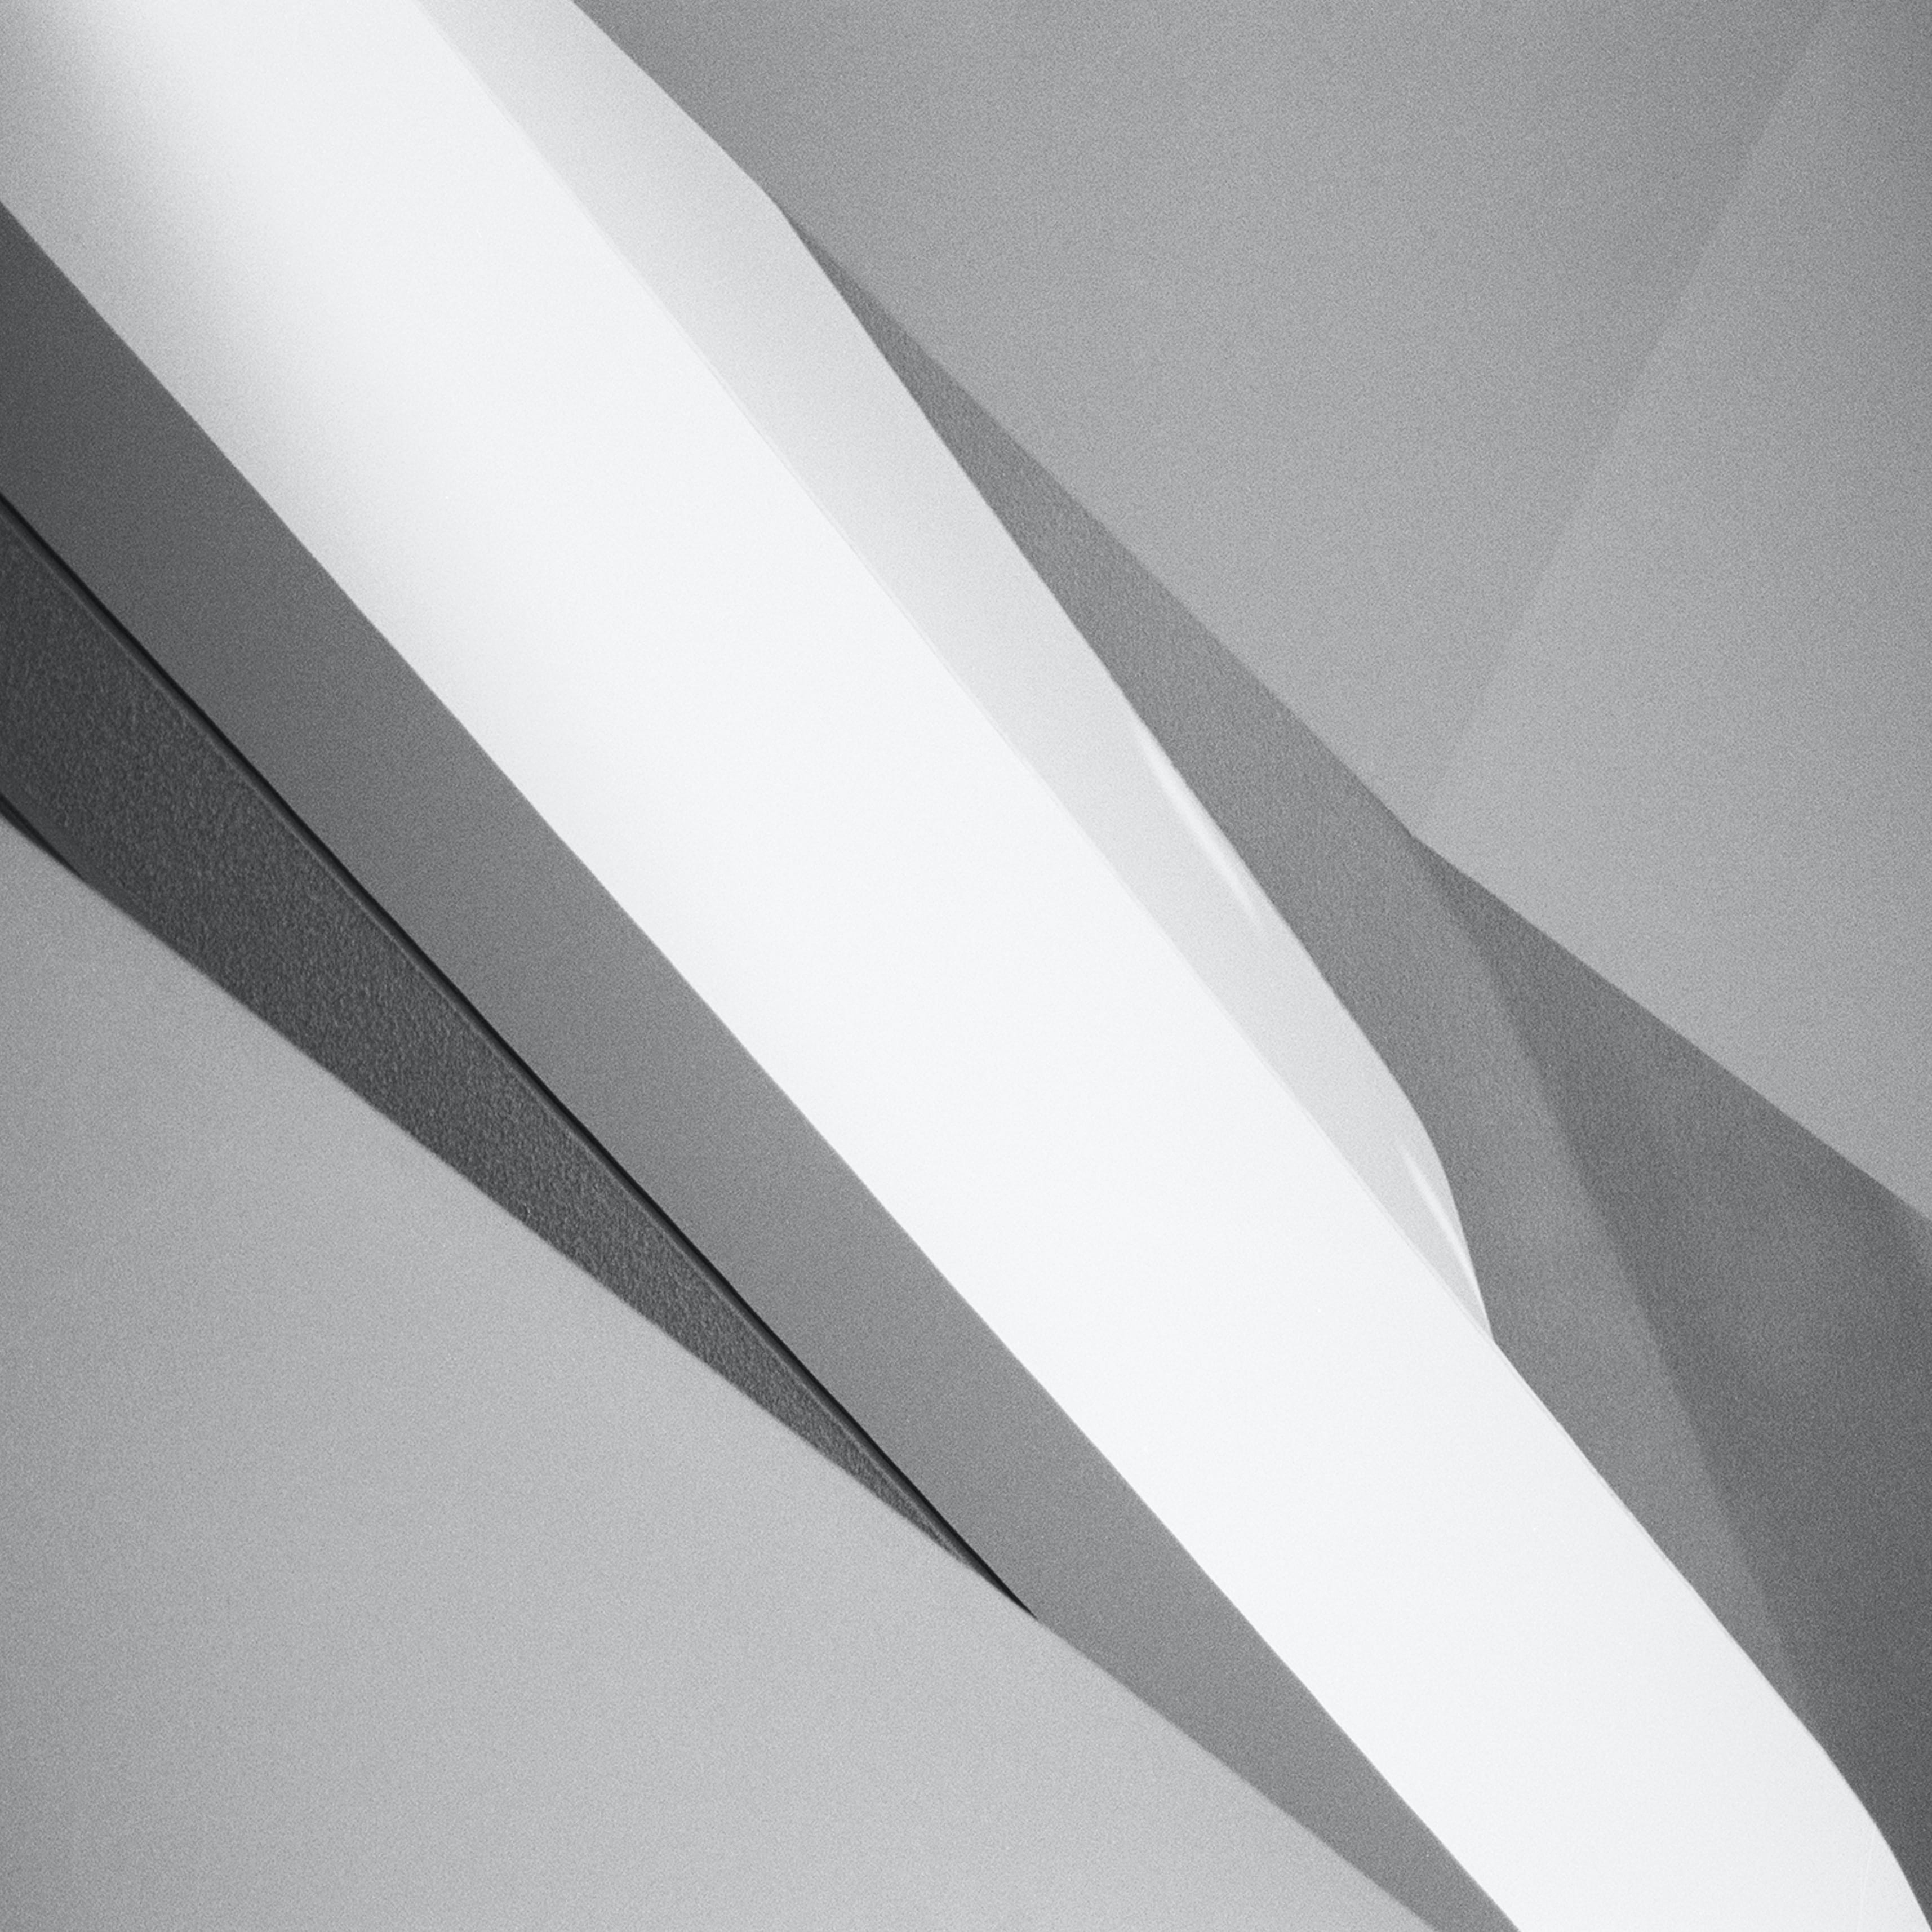 Martin C. Schmidt fotografia astratta forme geometriche e linee grigie